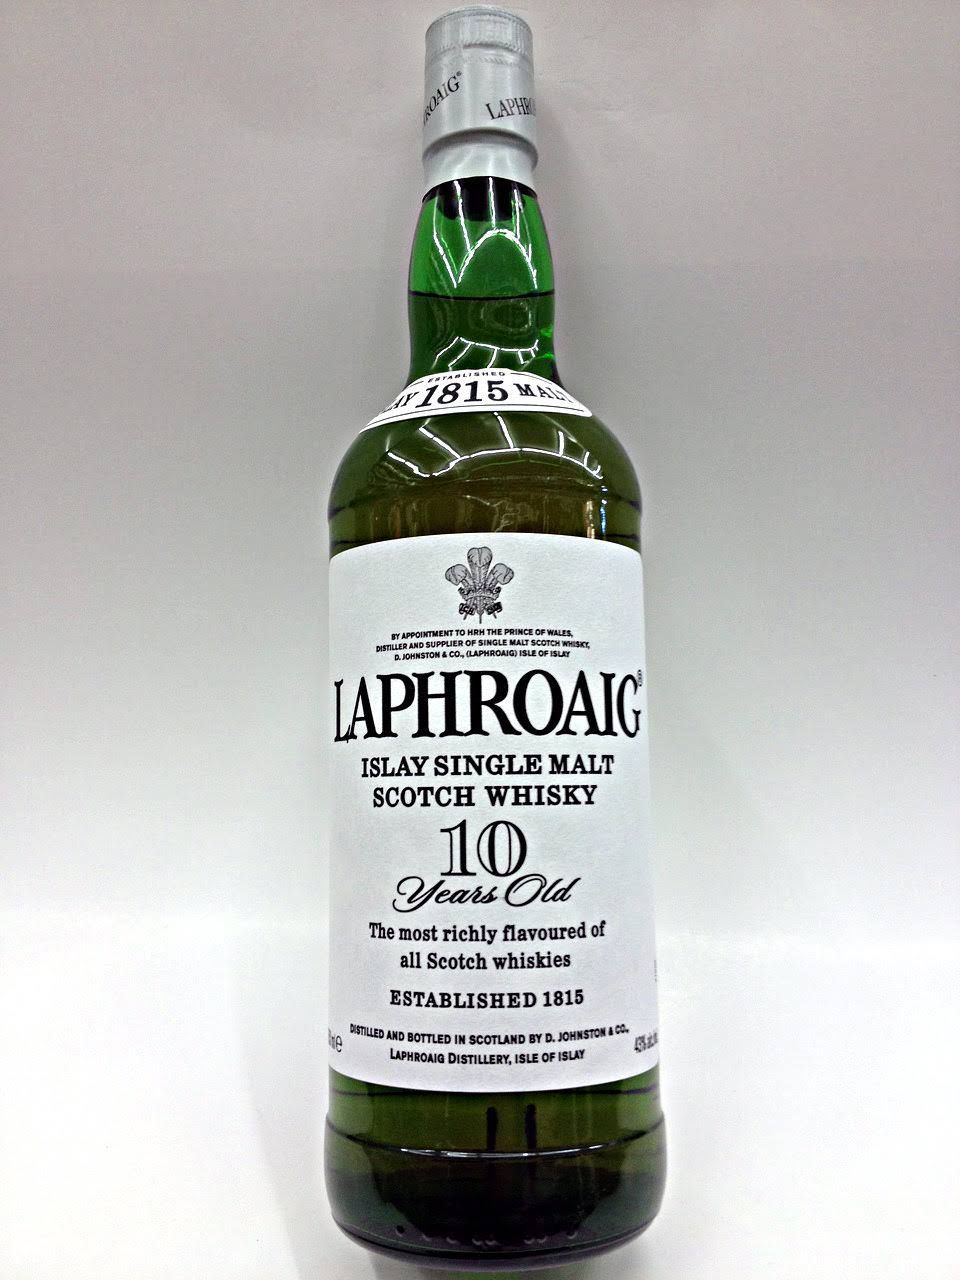 Laphroaig Scotch Whisky